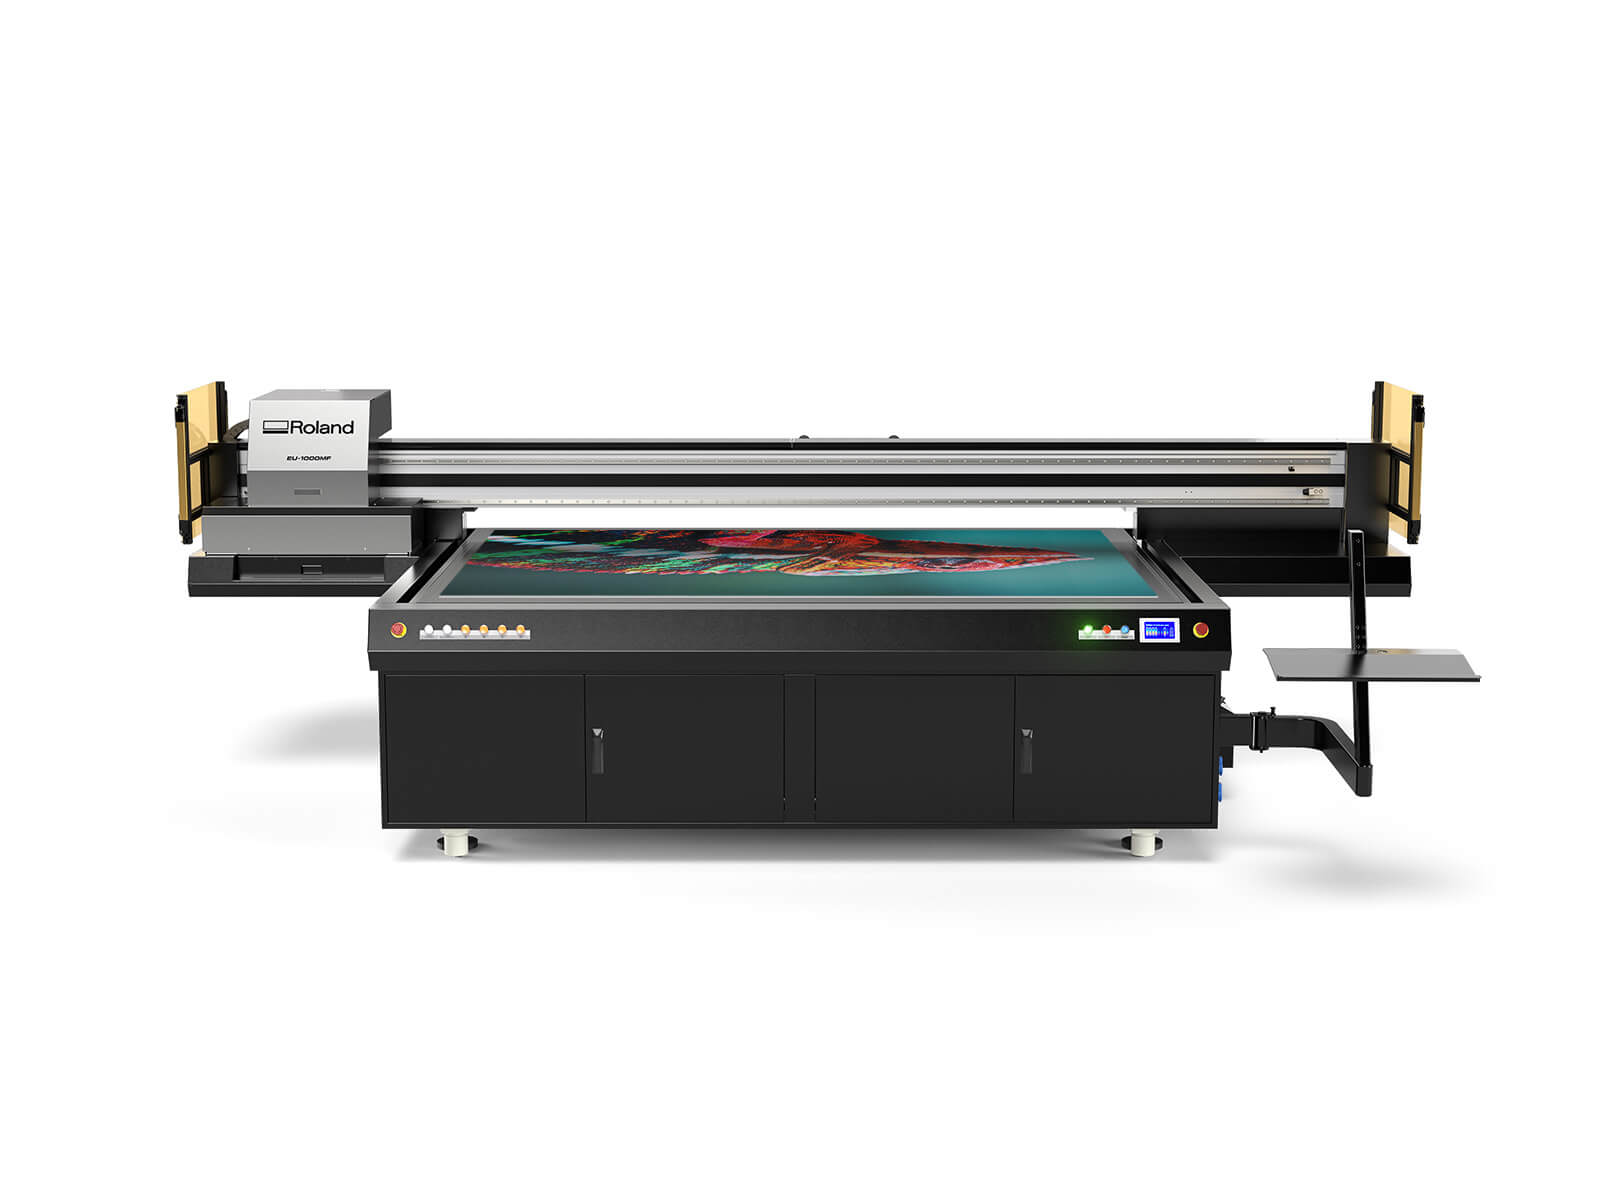 Image of Roland DG's new EU-1000MF high-volume UV flatbed printer